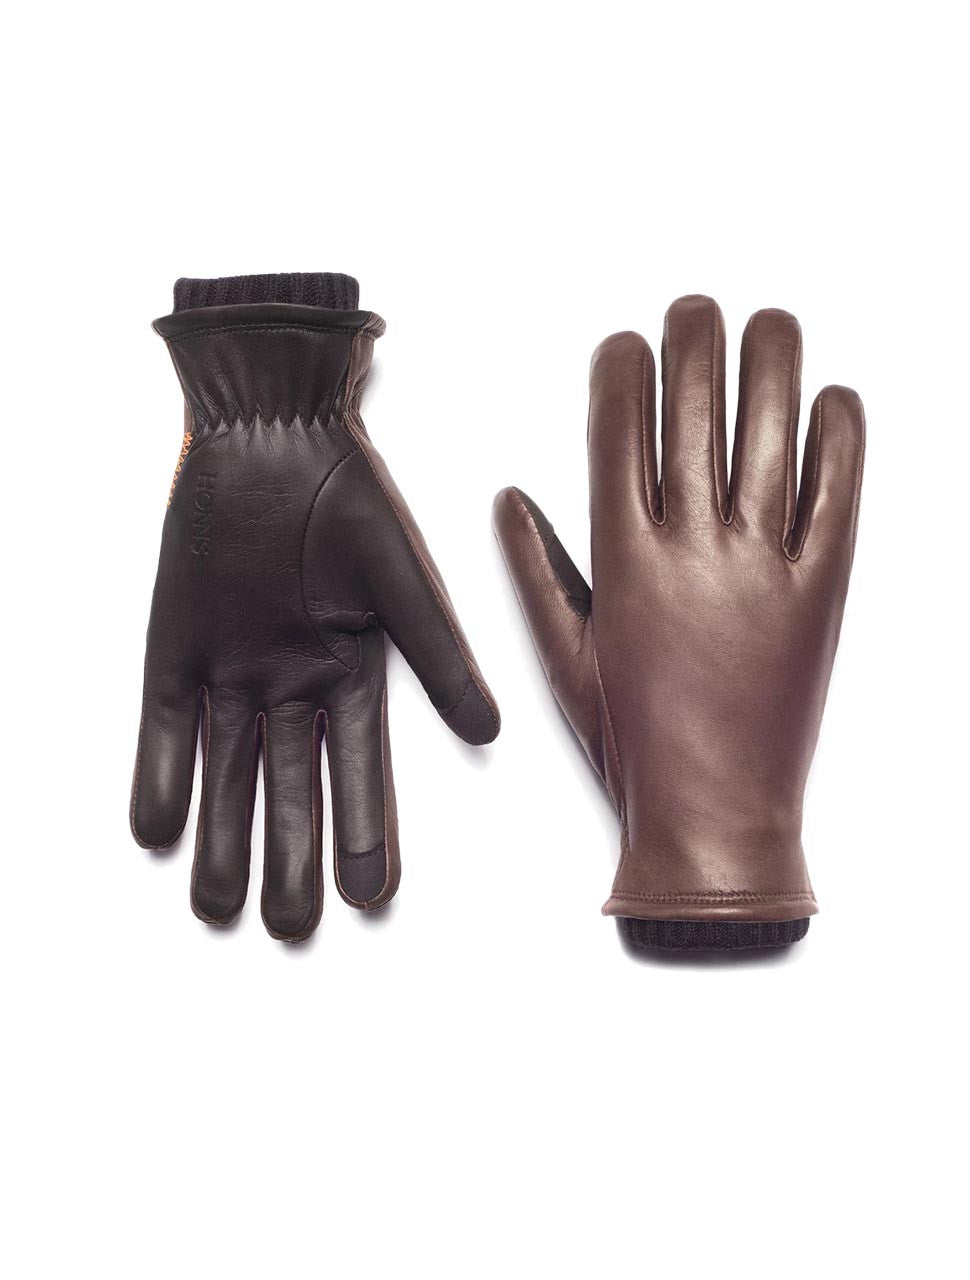 Oliver Touchscreen Gloves in Mocha - HONNS